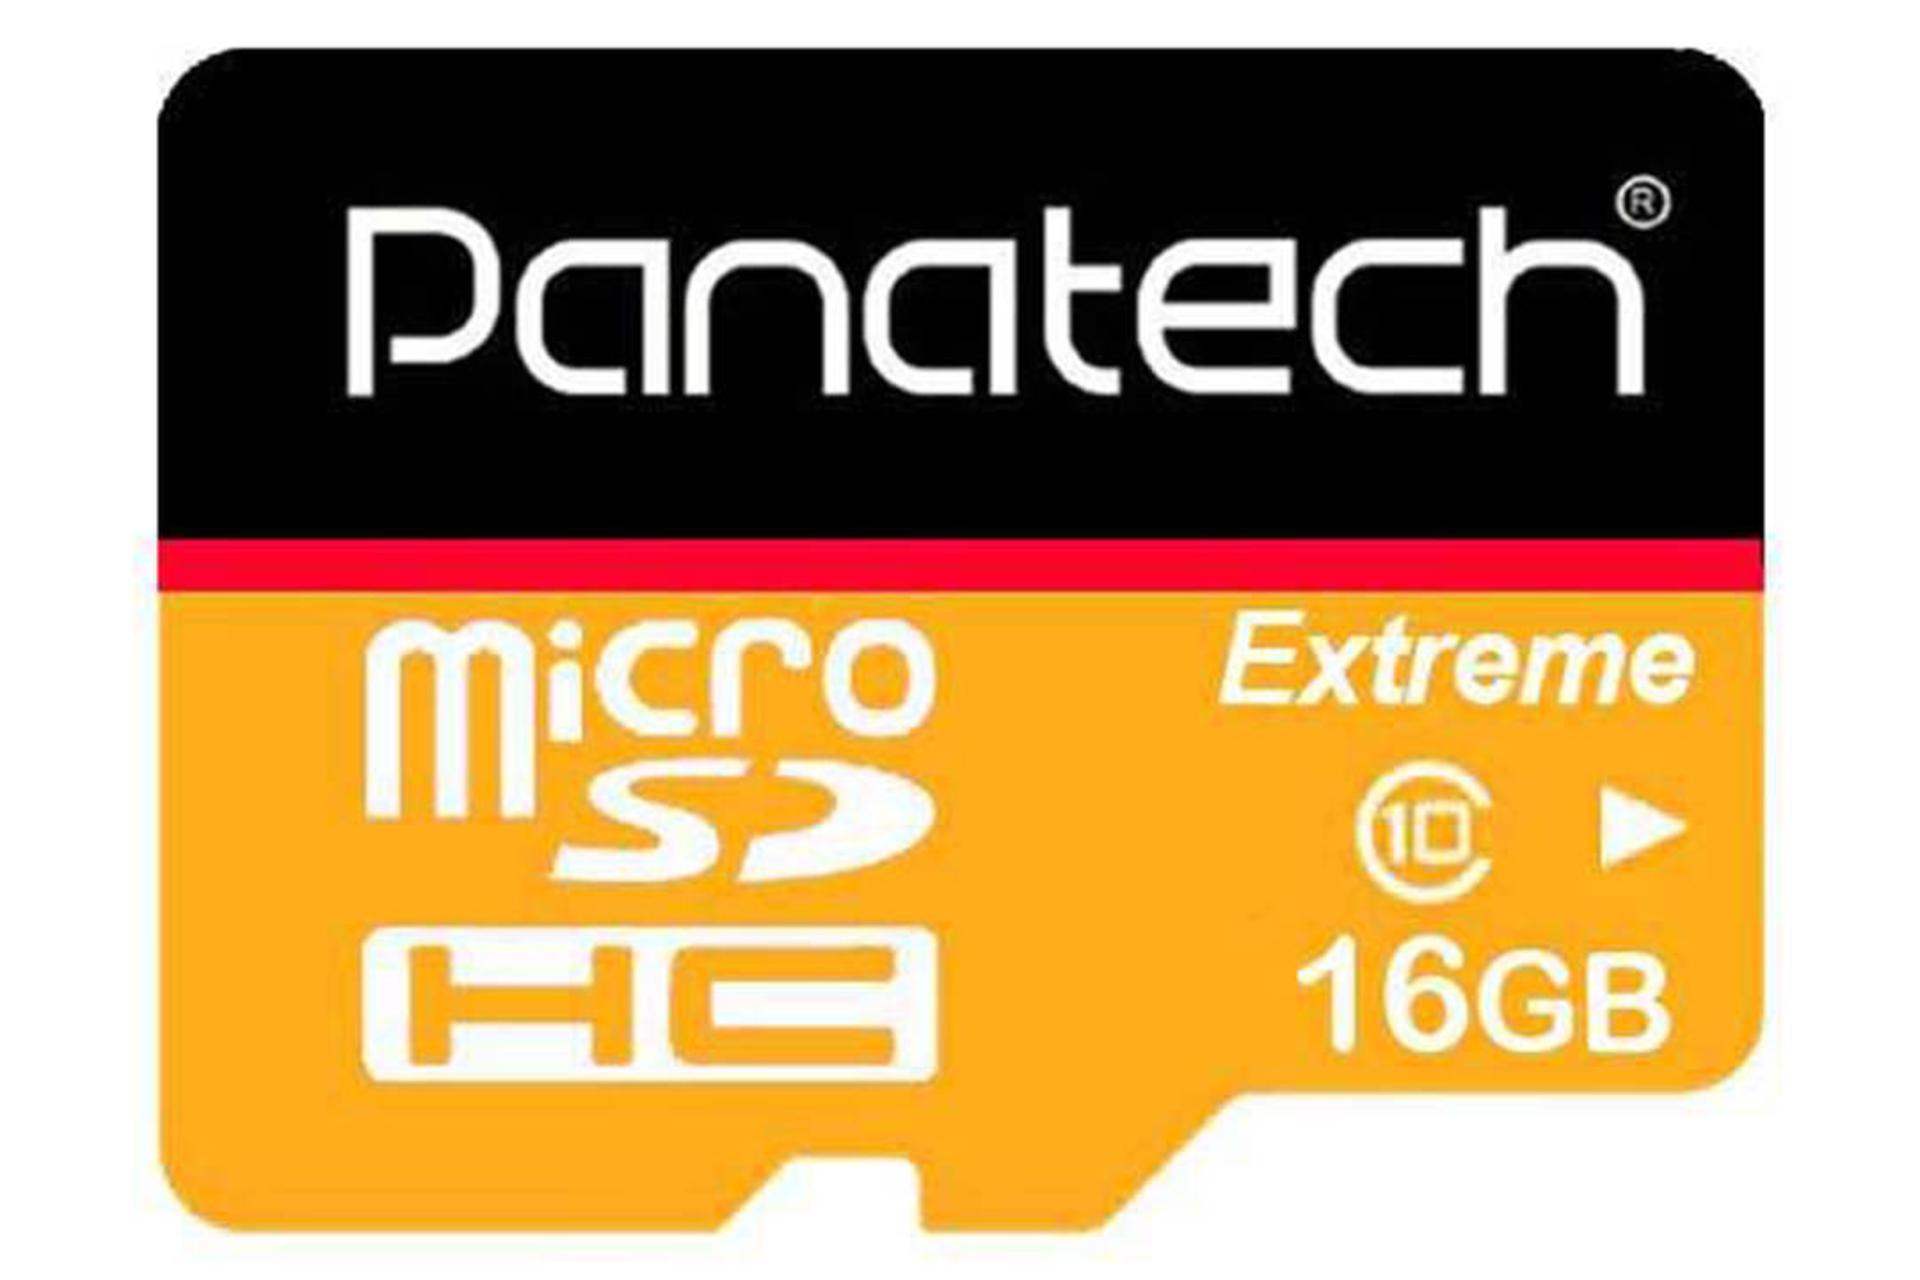 Panatech Extreme microSDHC Class 10 UHS-I U1 16GB